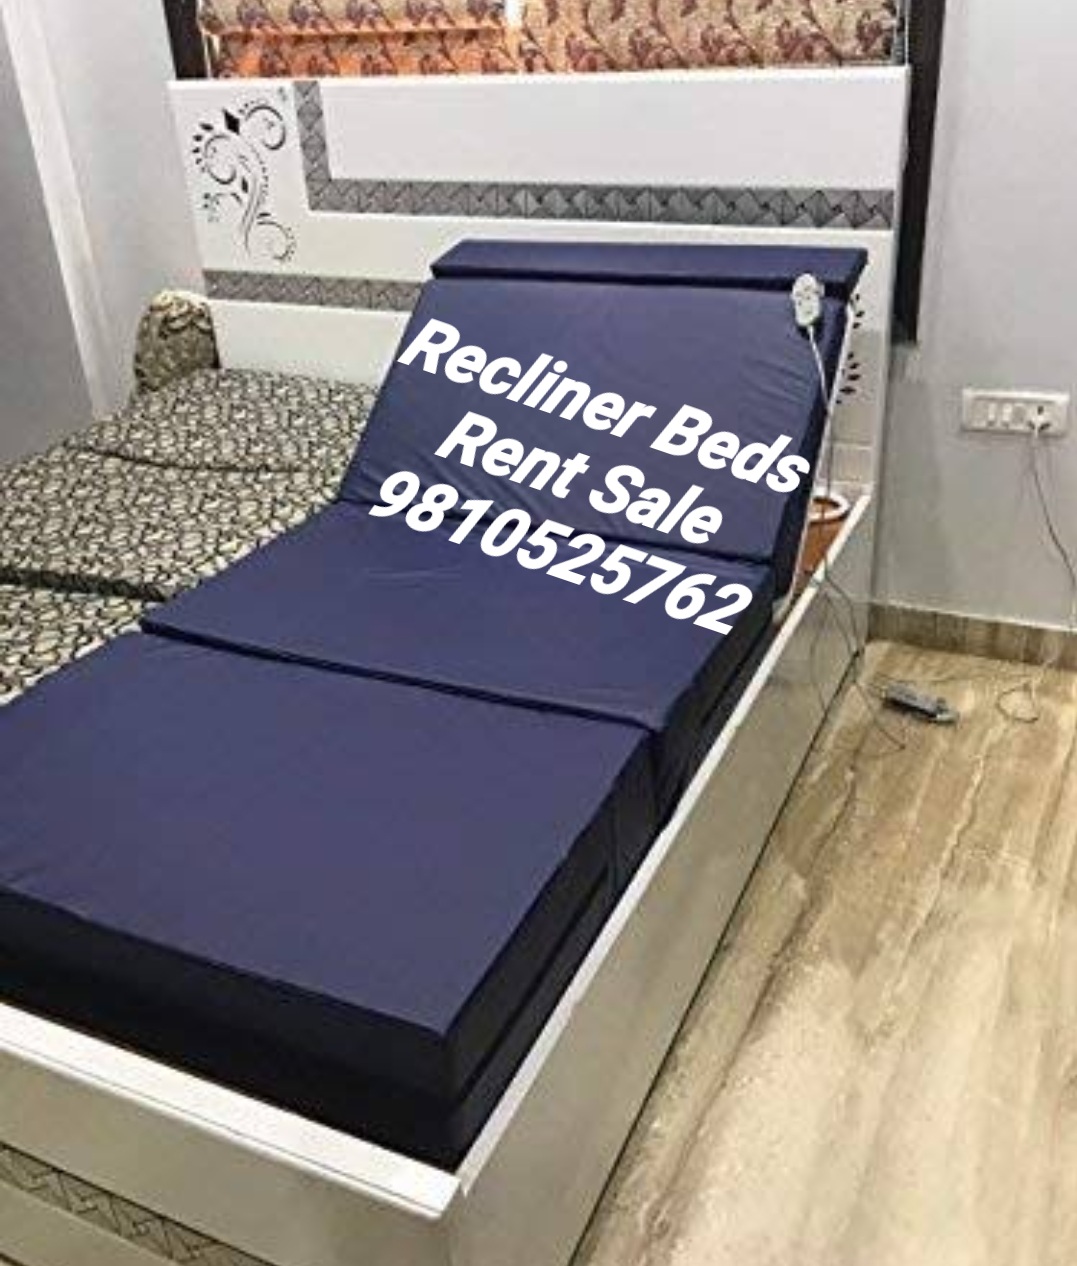 motorised bed recliner On Rent 8178463439